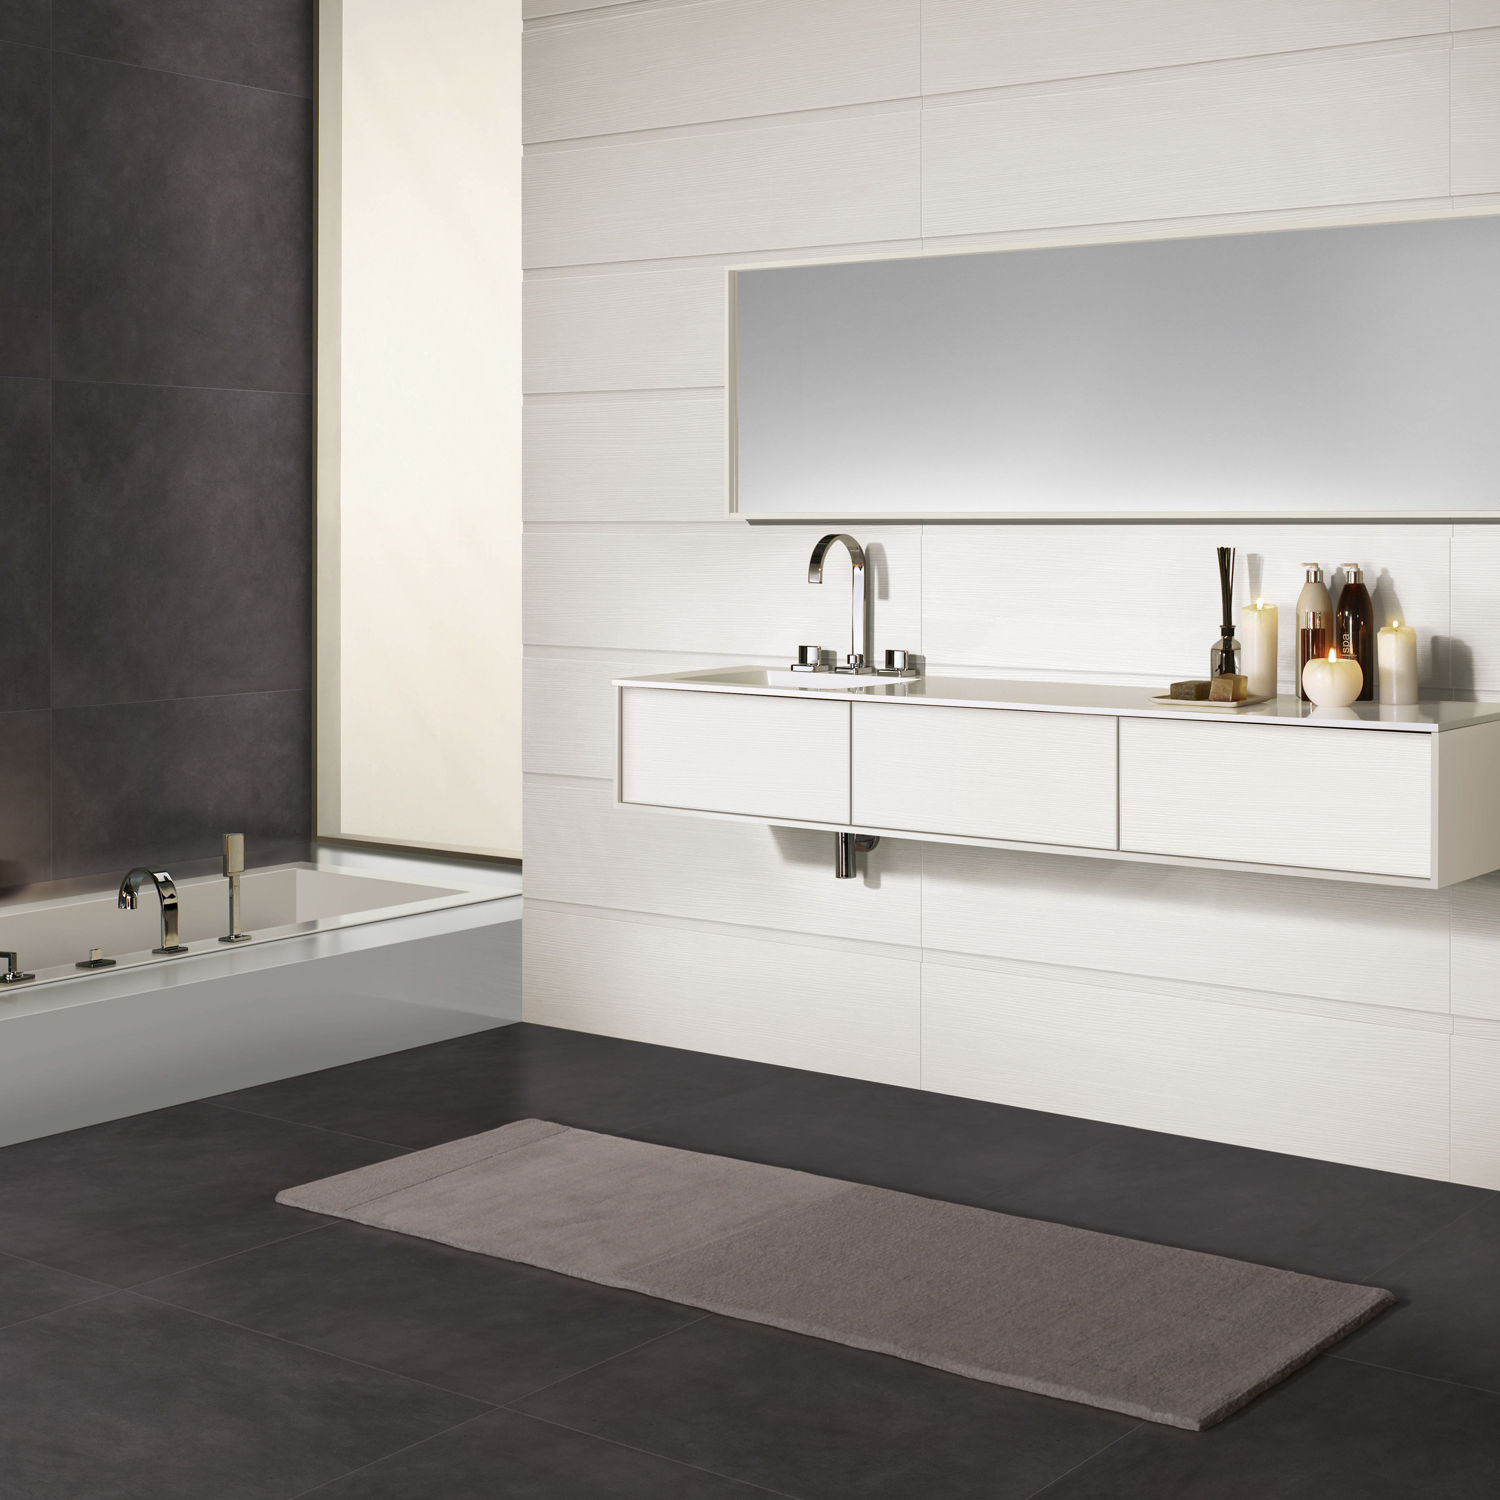 107_4_modern-bathroom-floor-tile-cool-dark-amusing-interior-design-gentle-polished-f